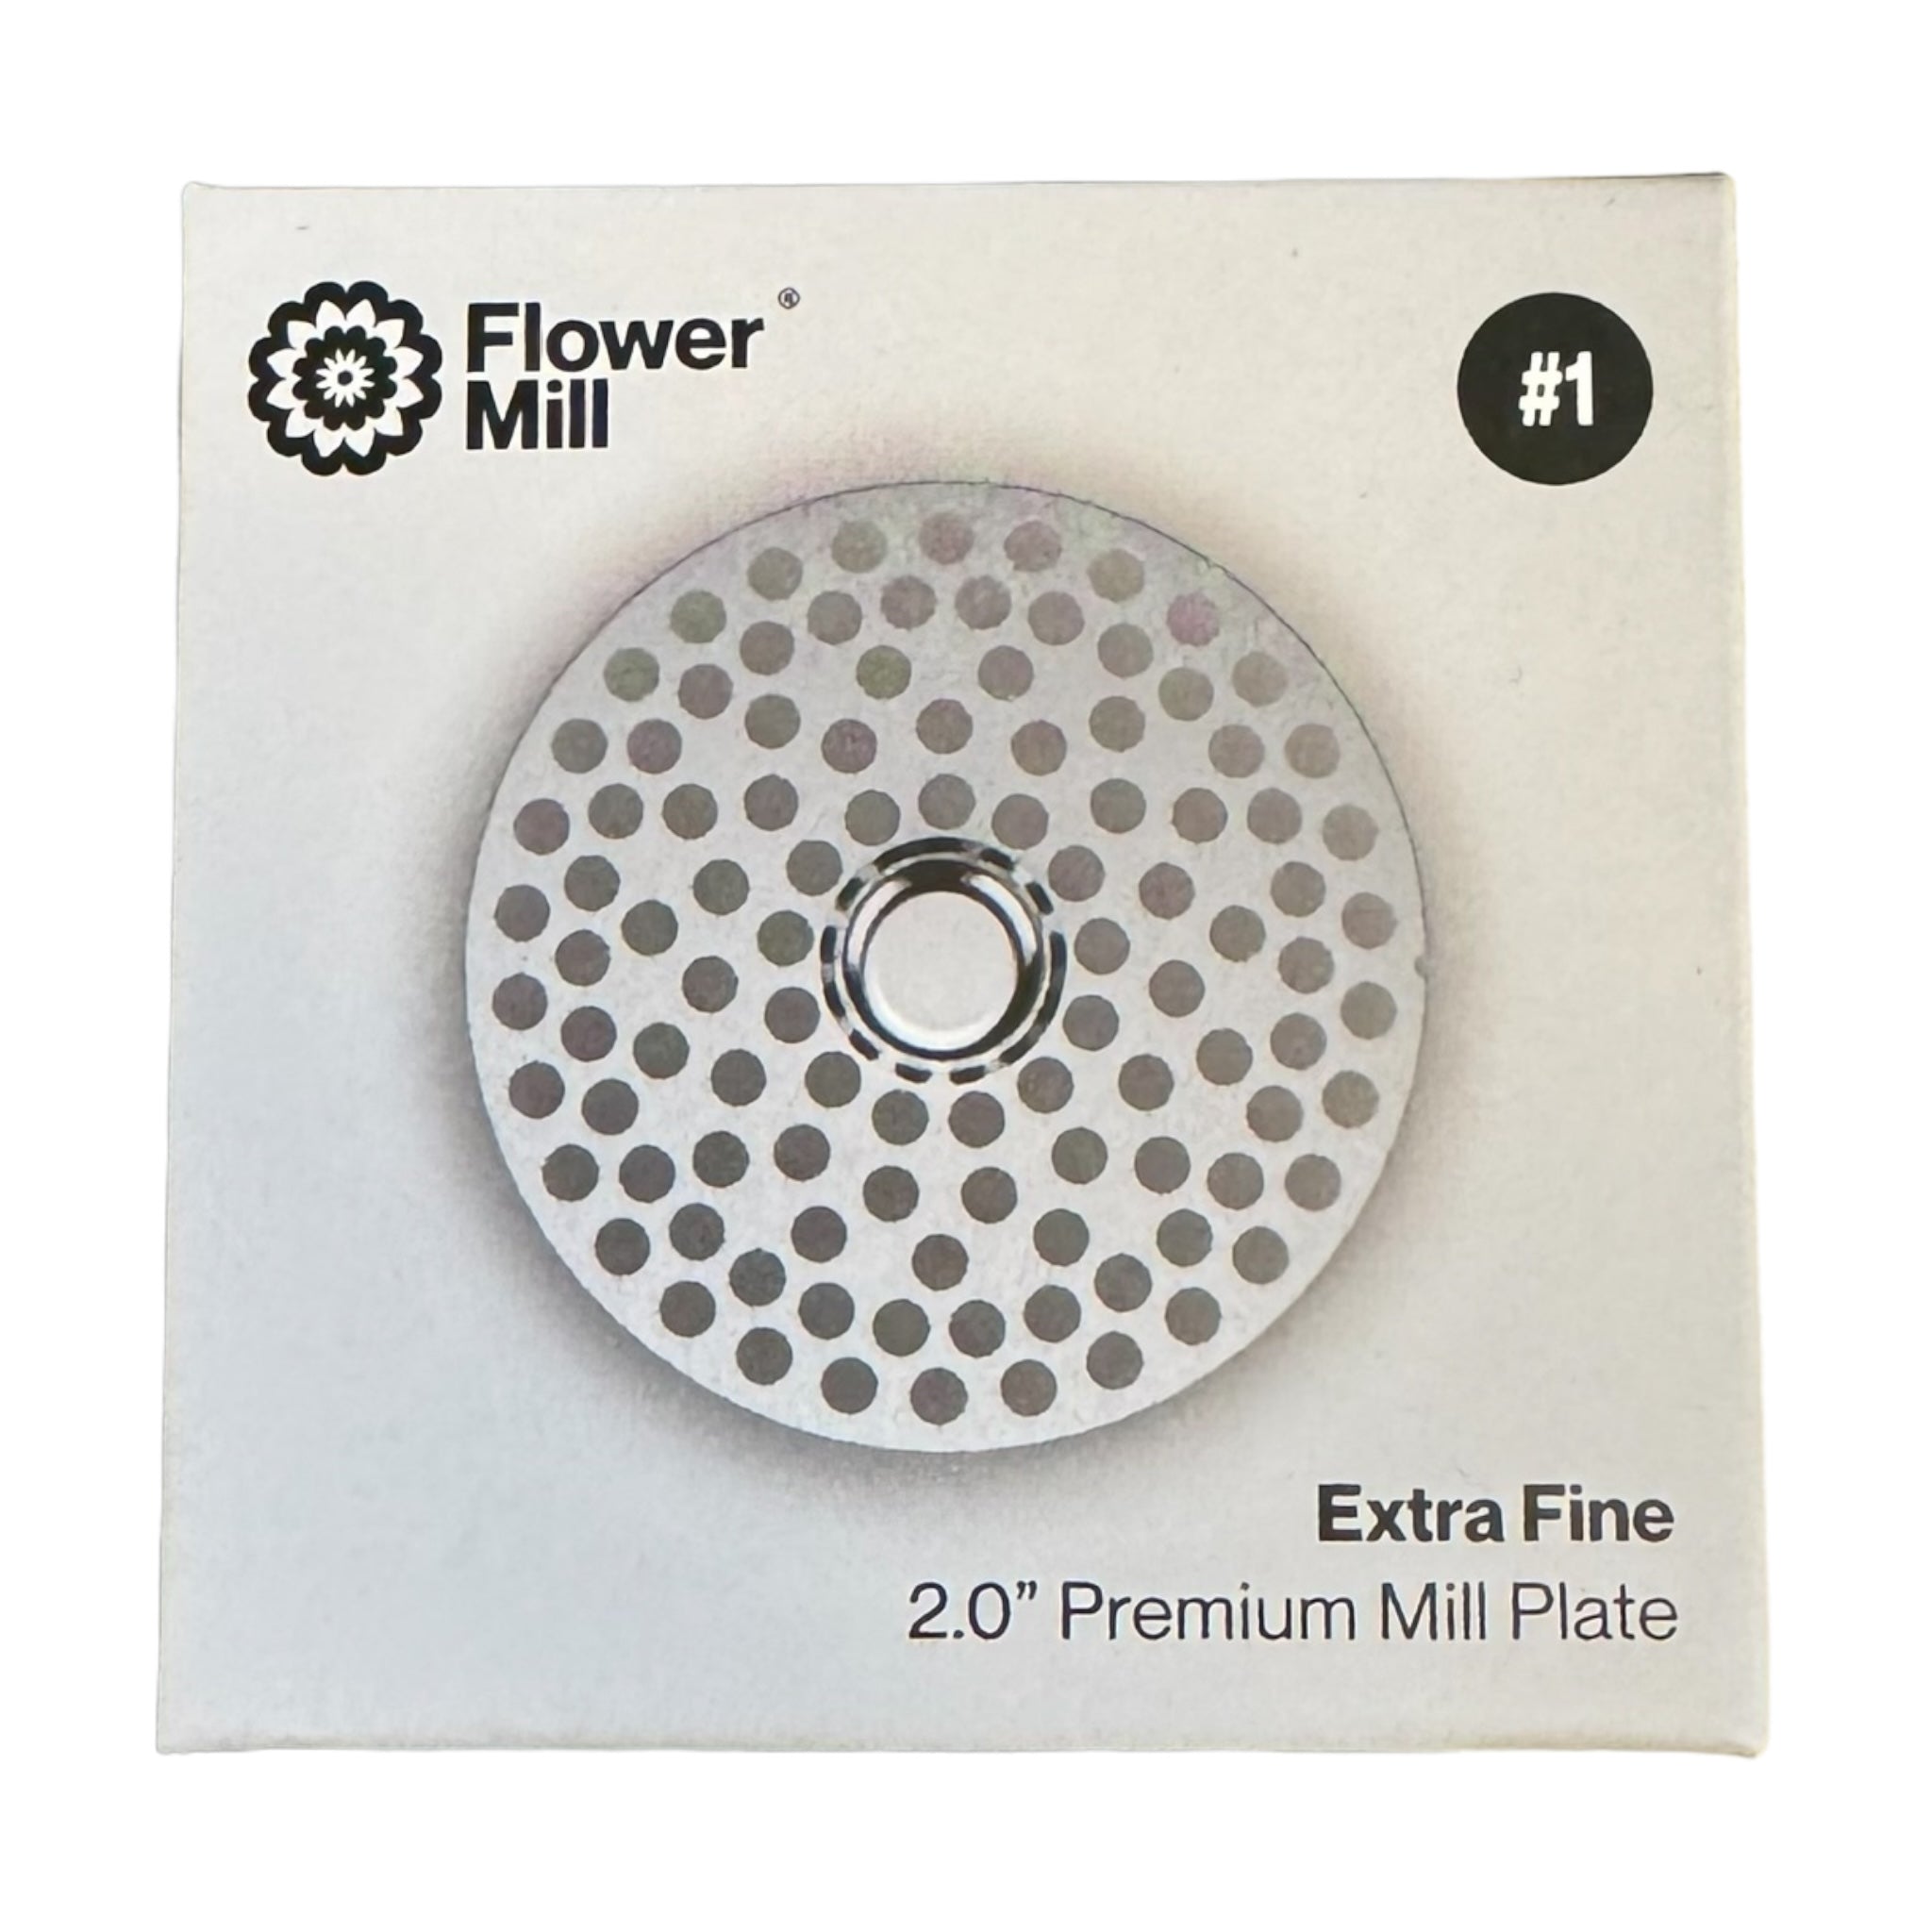 Flower Mill Next Gen Premium 2.0" Mill Plate Extra Fine #1